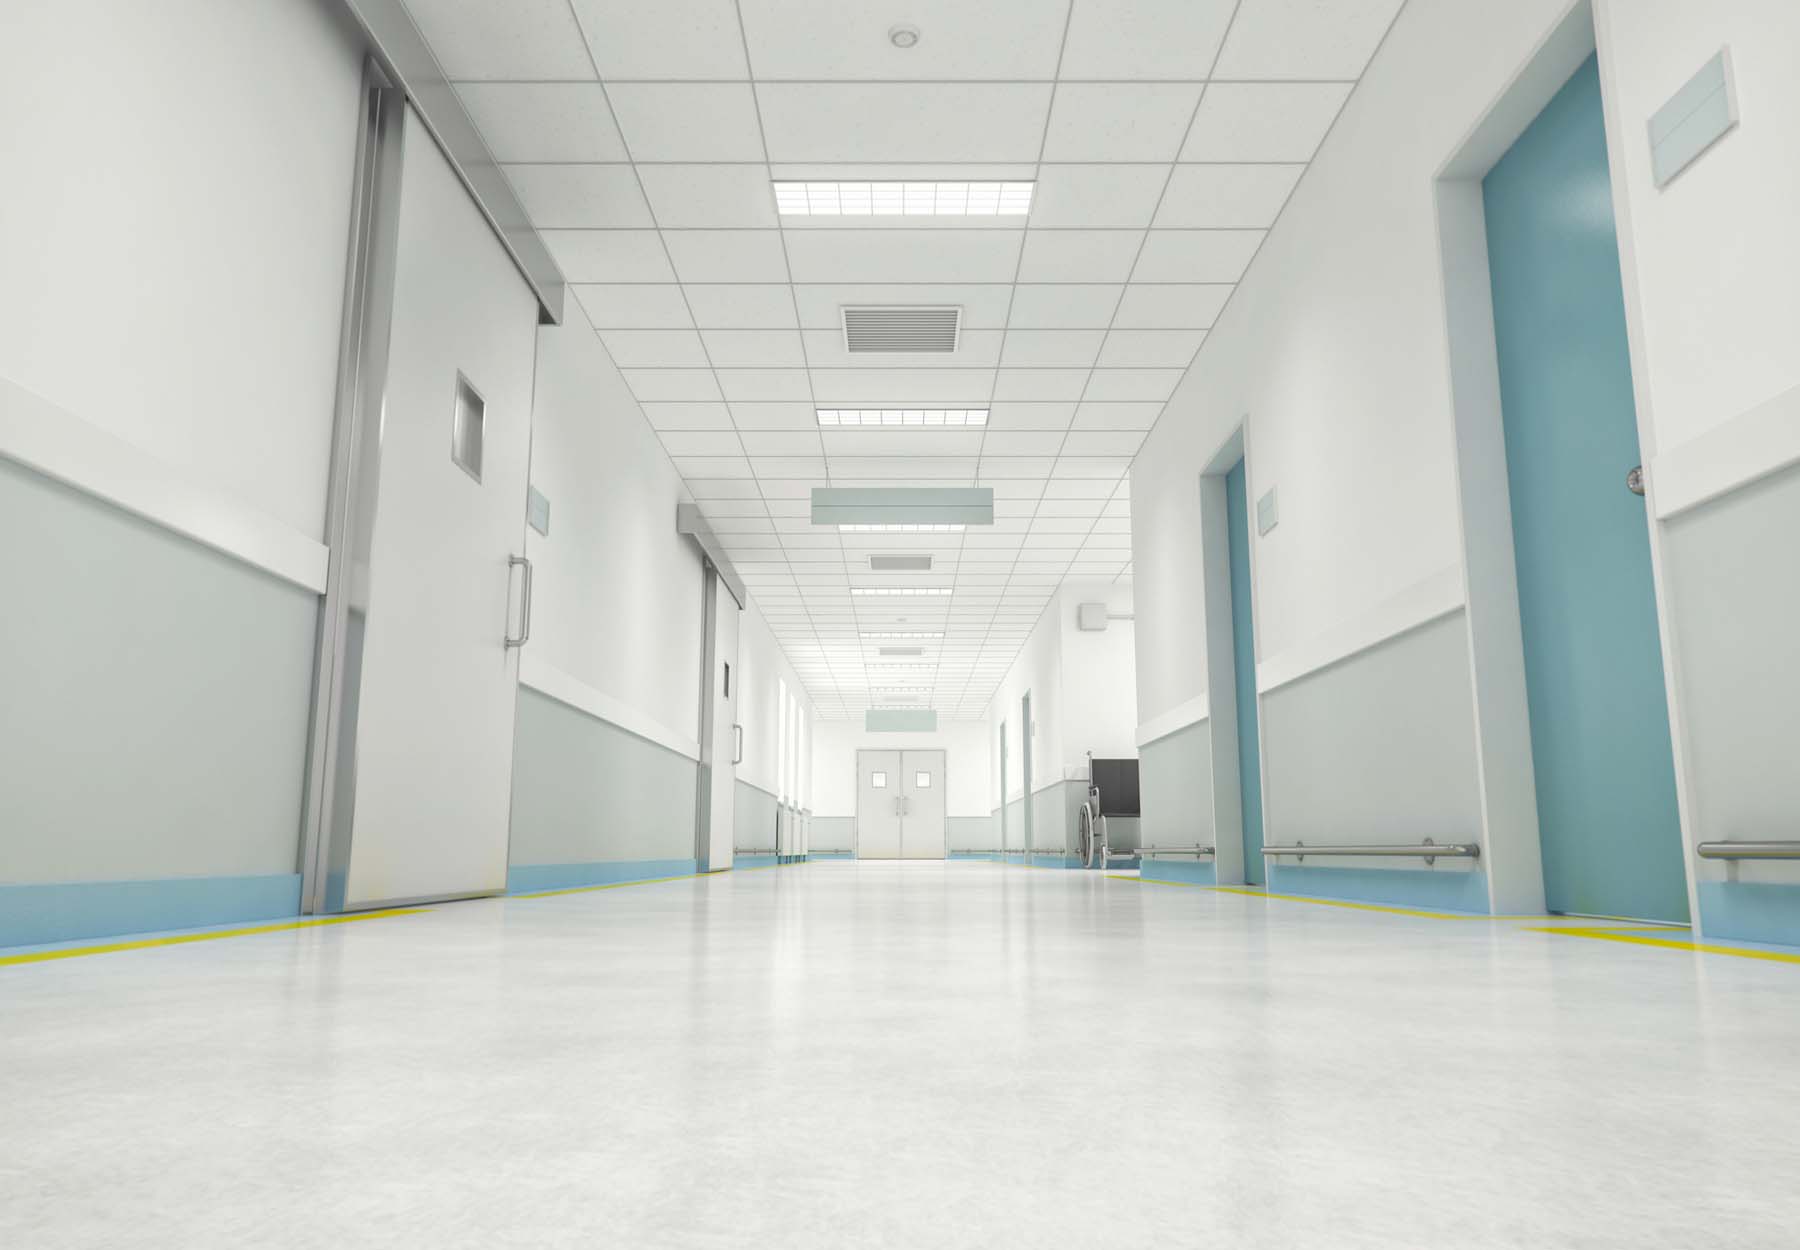 The empty hallway of a hospital.